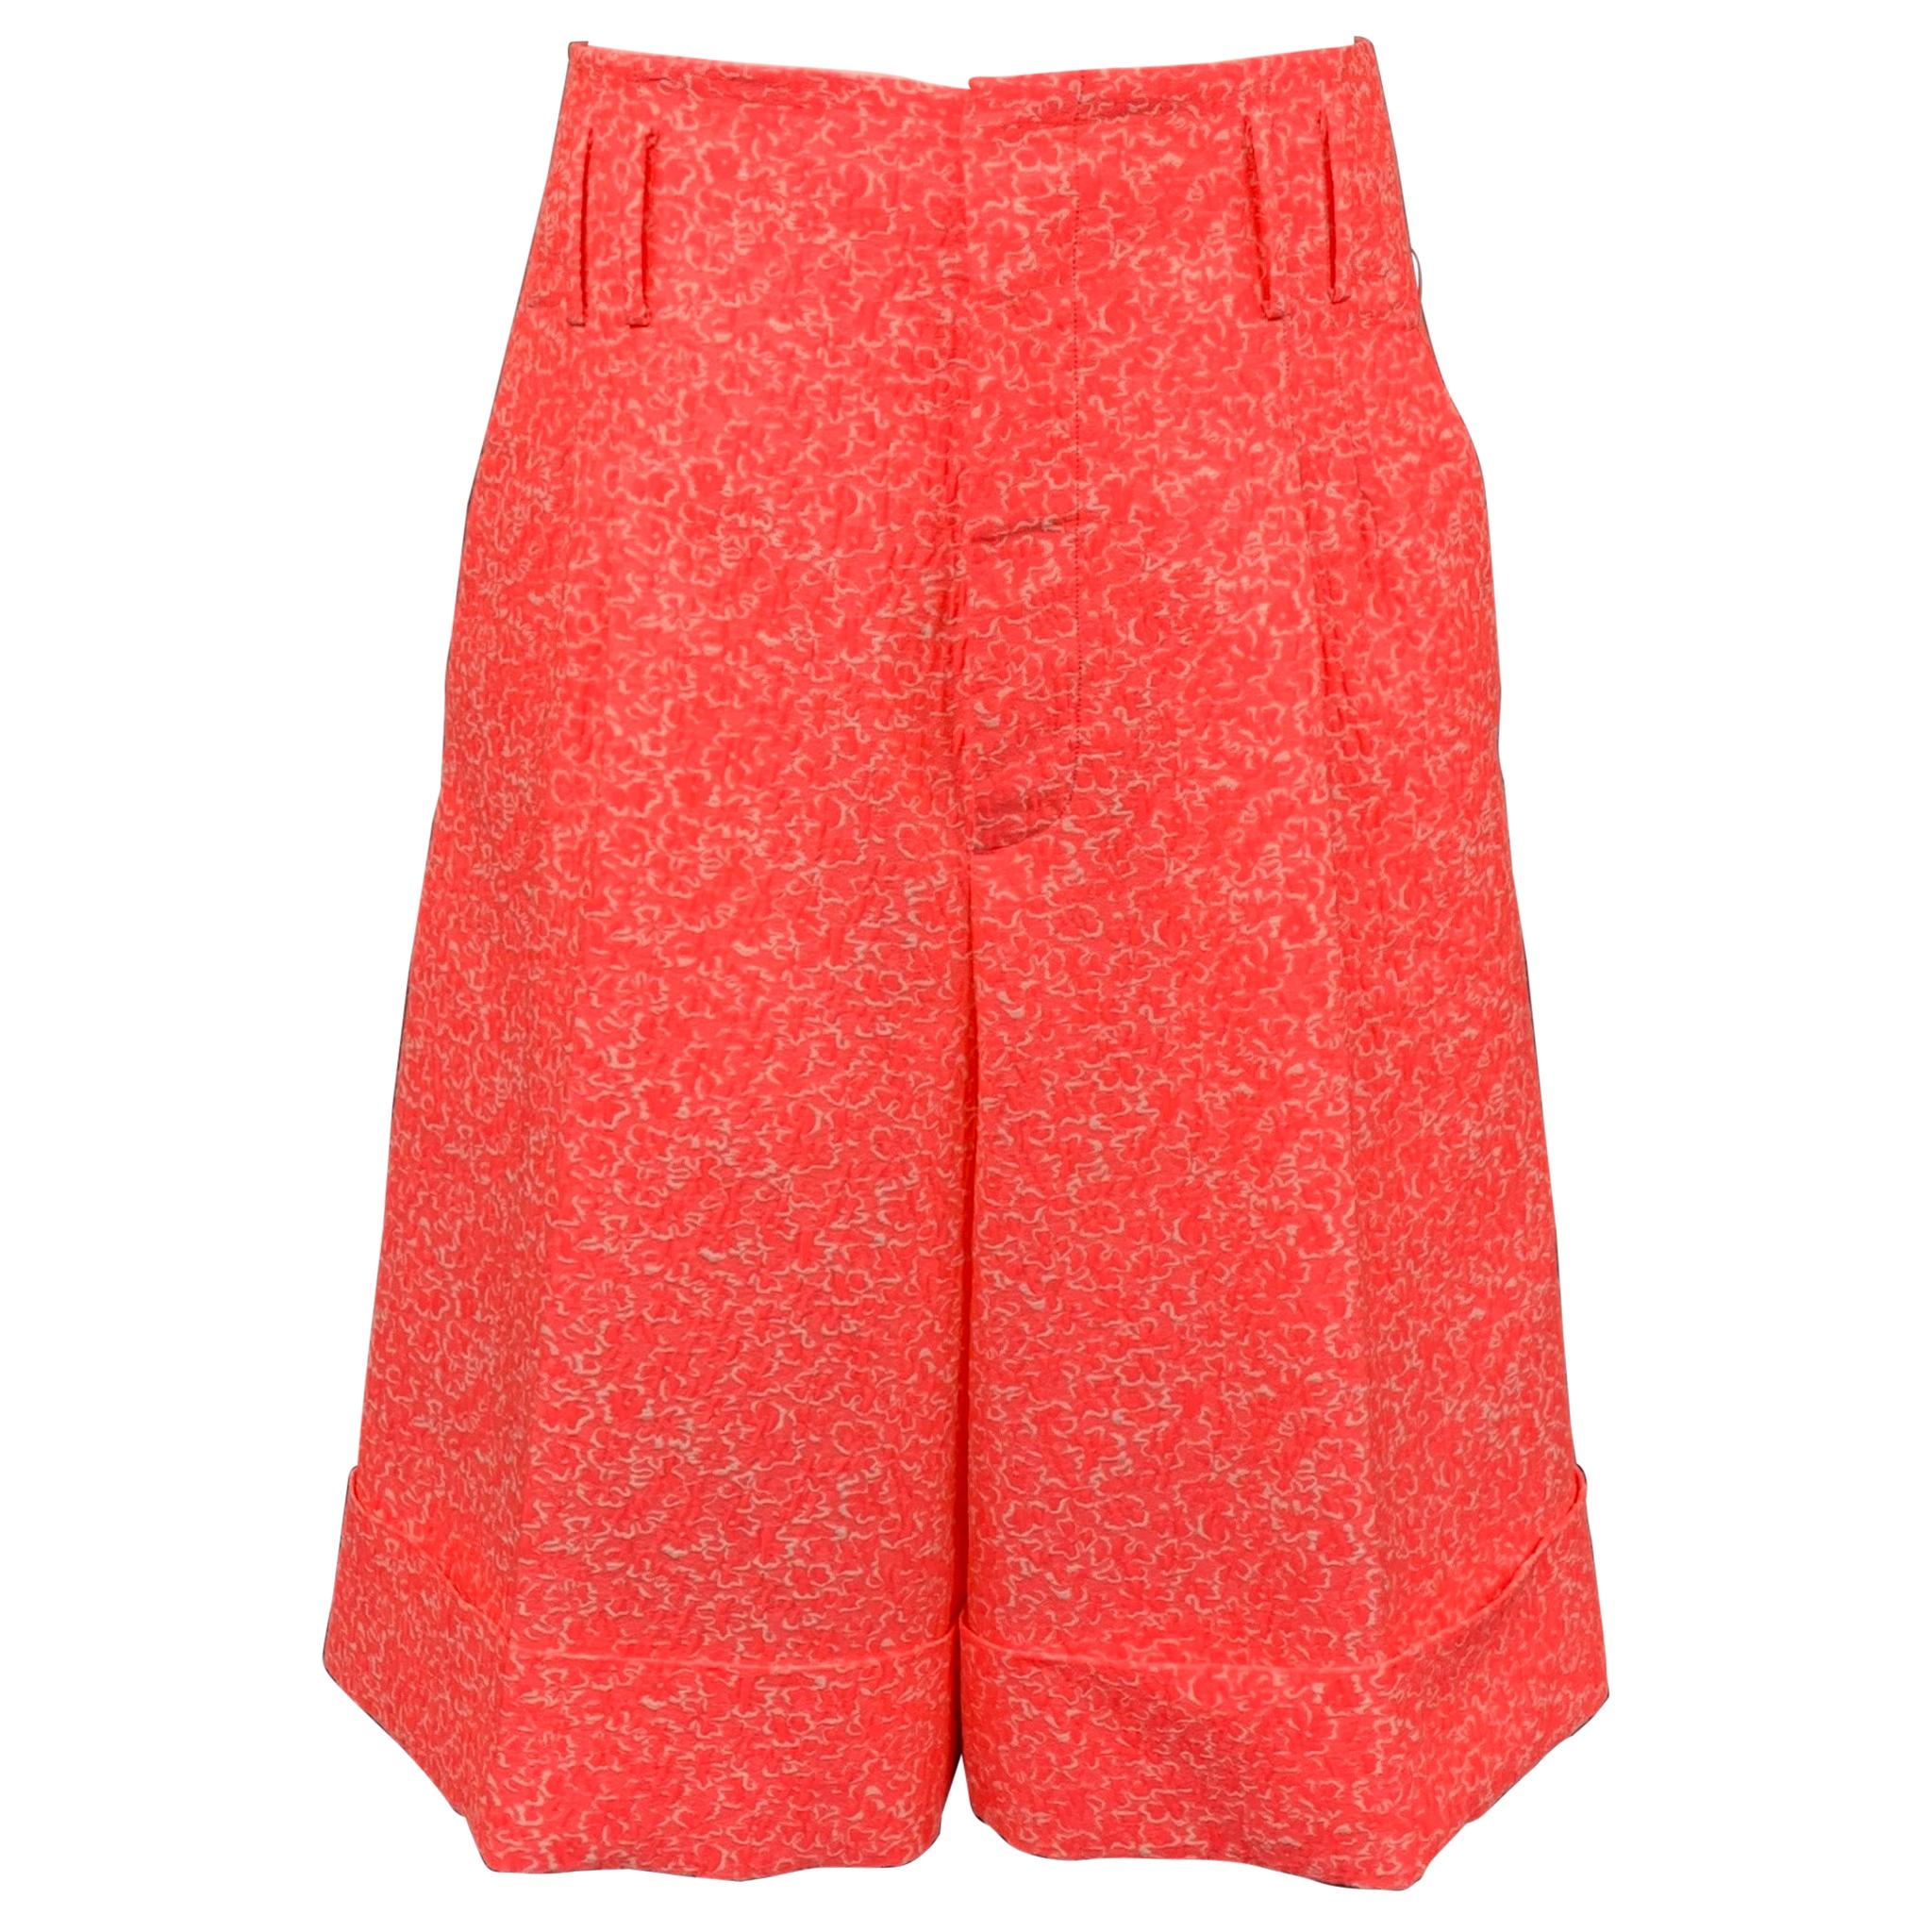 JIL SANDER Size 32 Pink & White Jacquard Cotton Blend Pleated Shorts